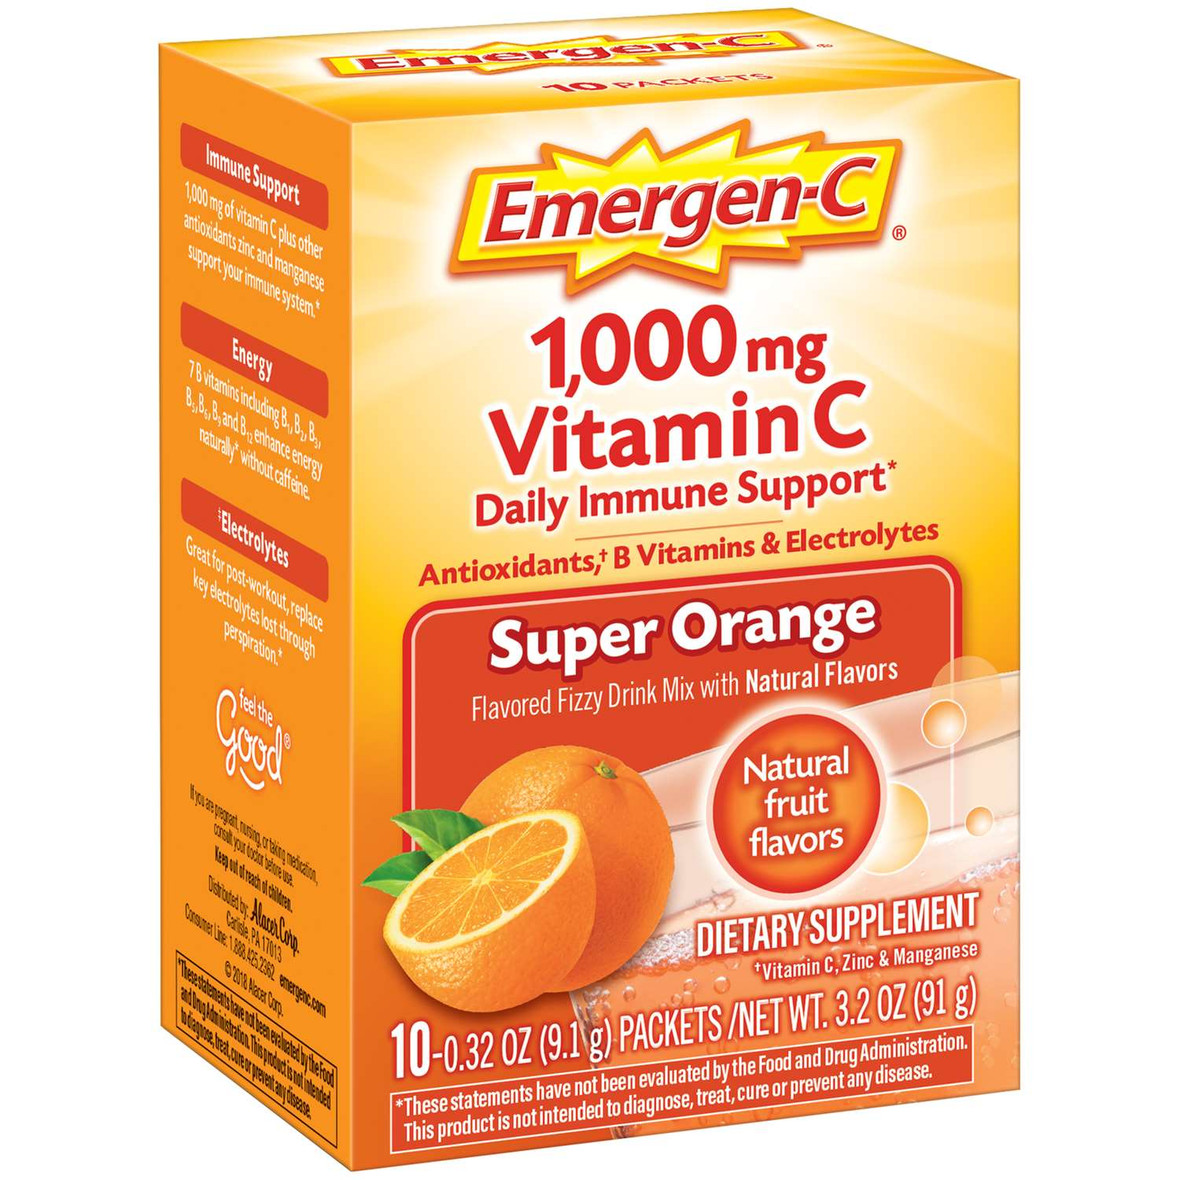 Emergen-C Super Orange 1000 mg Vitamin C Daily Immune Support